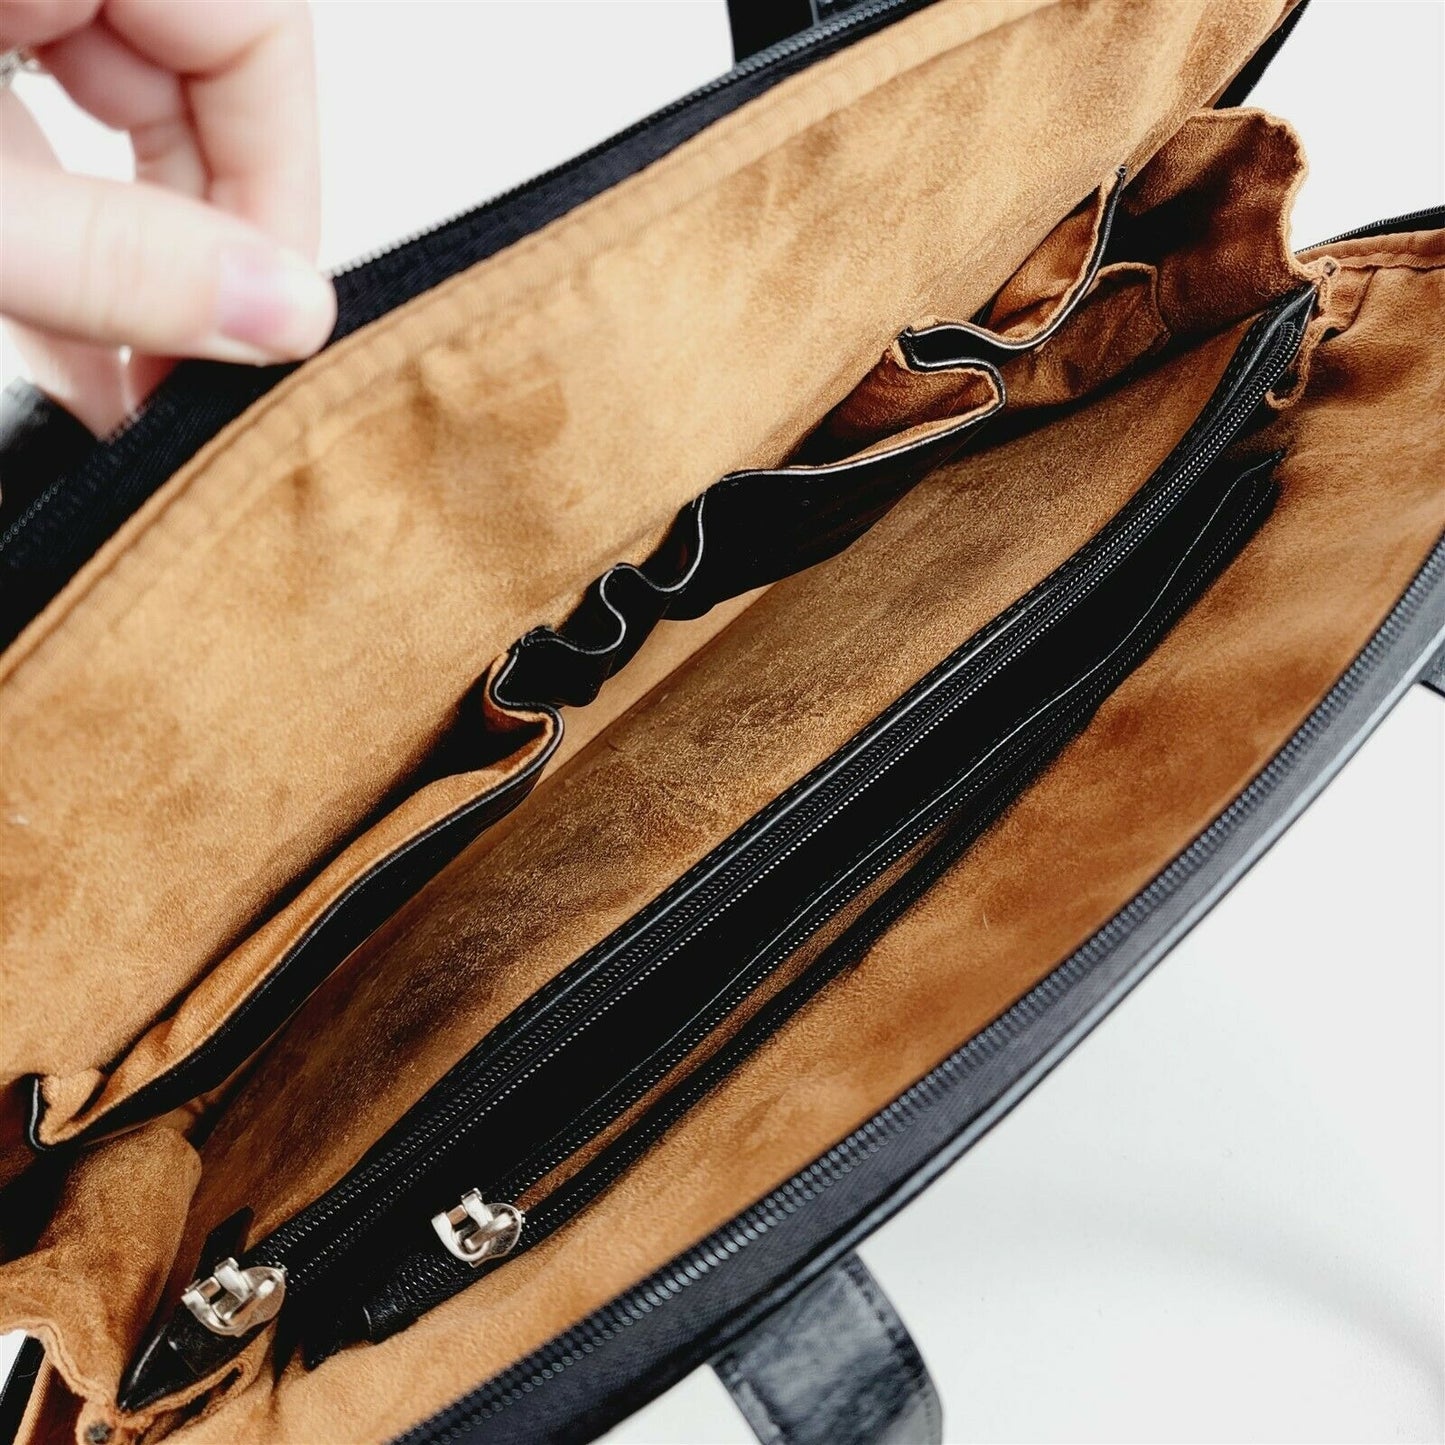 Alicia Klein Tote Vegan Leather Black Laptop Bag Carry On